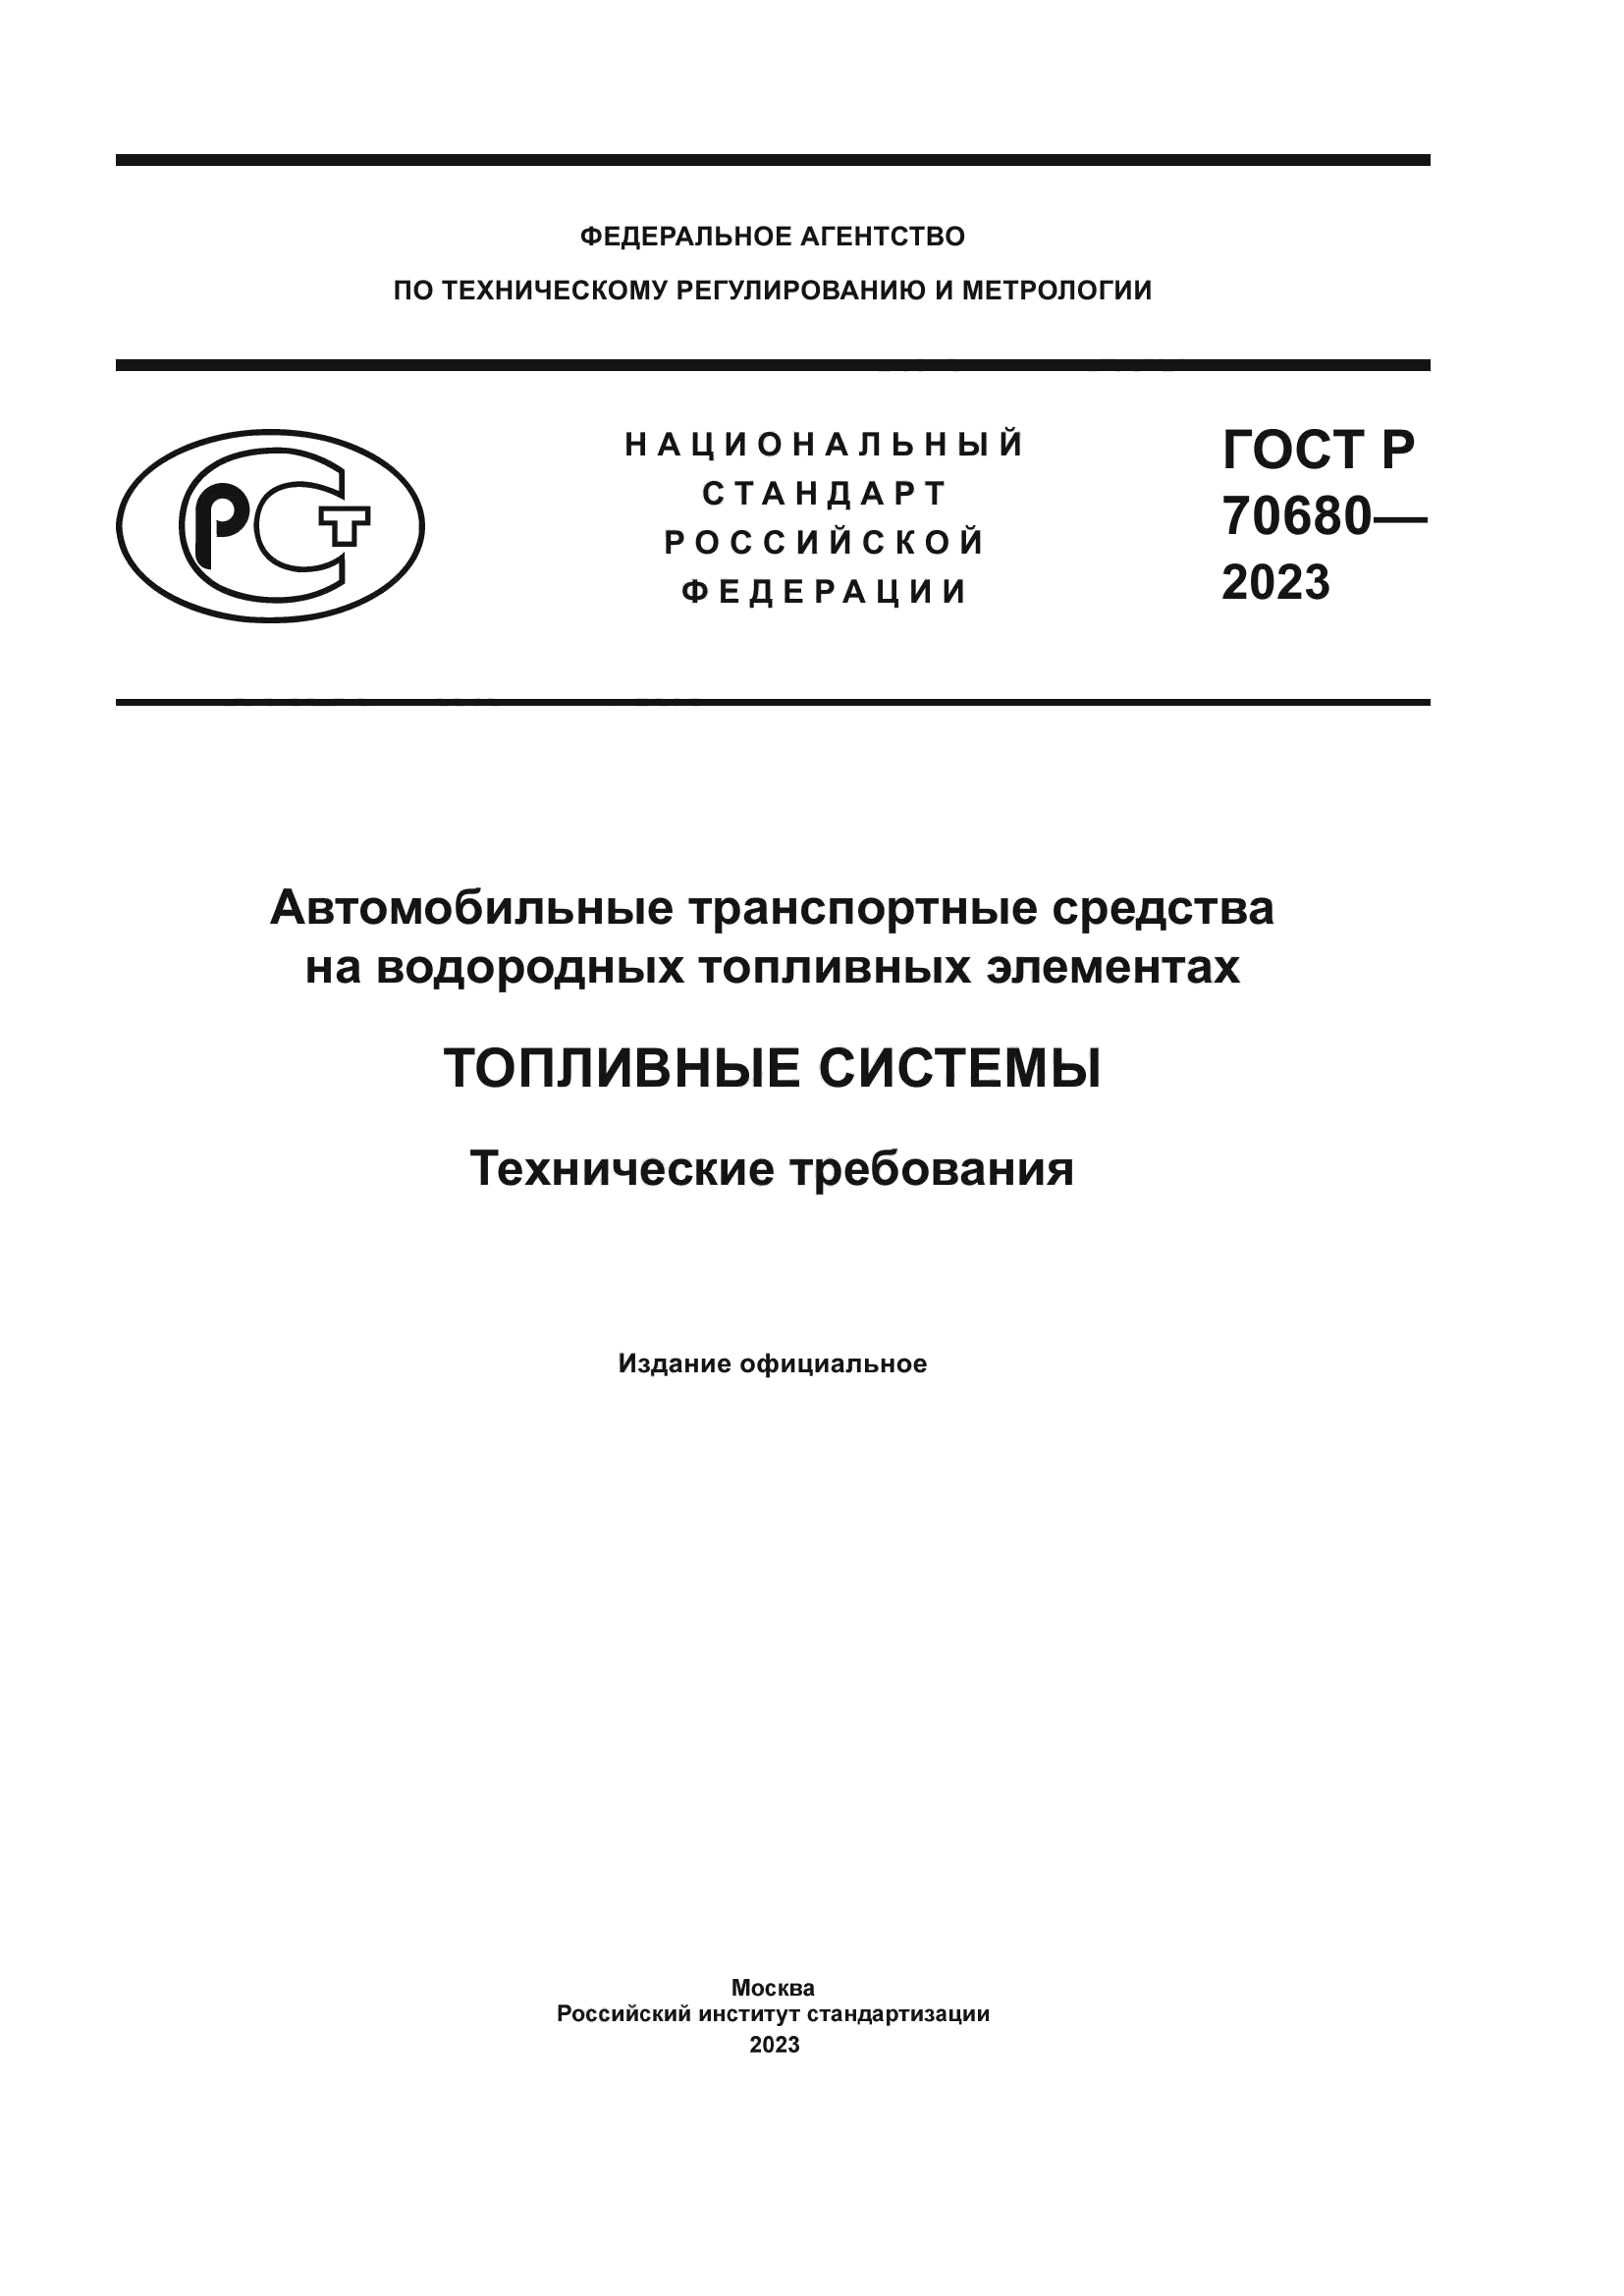 ГОСТ Р 70680-2023